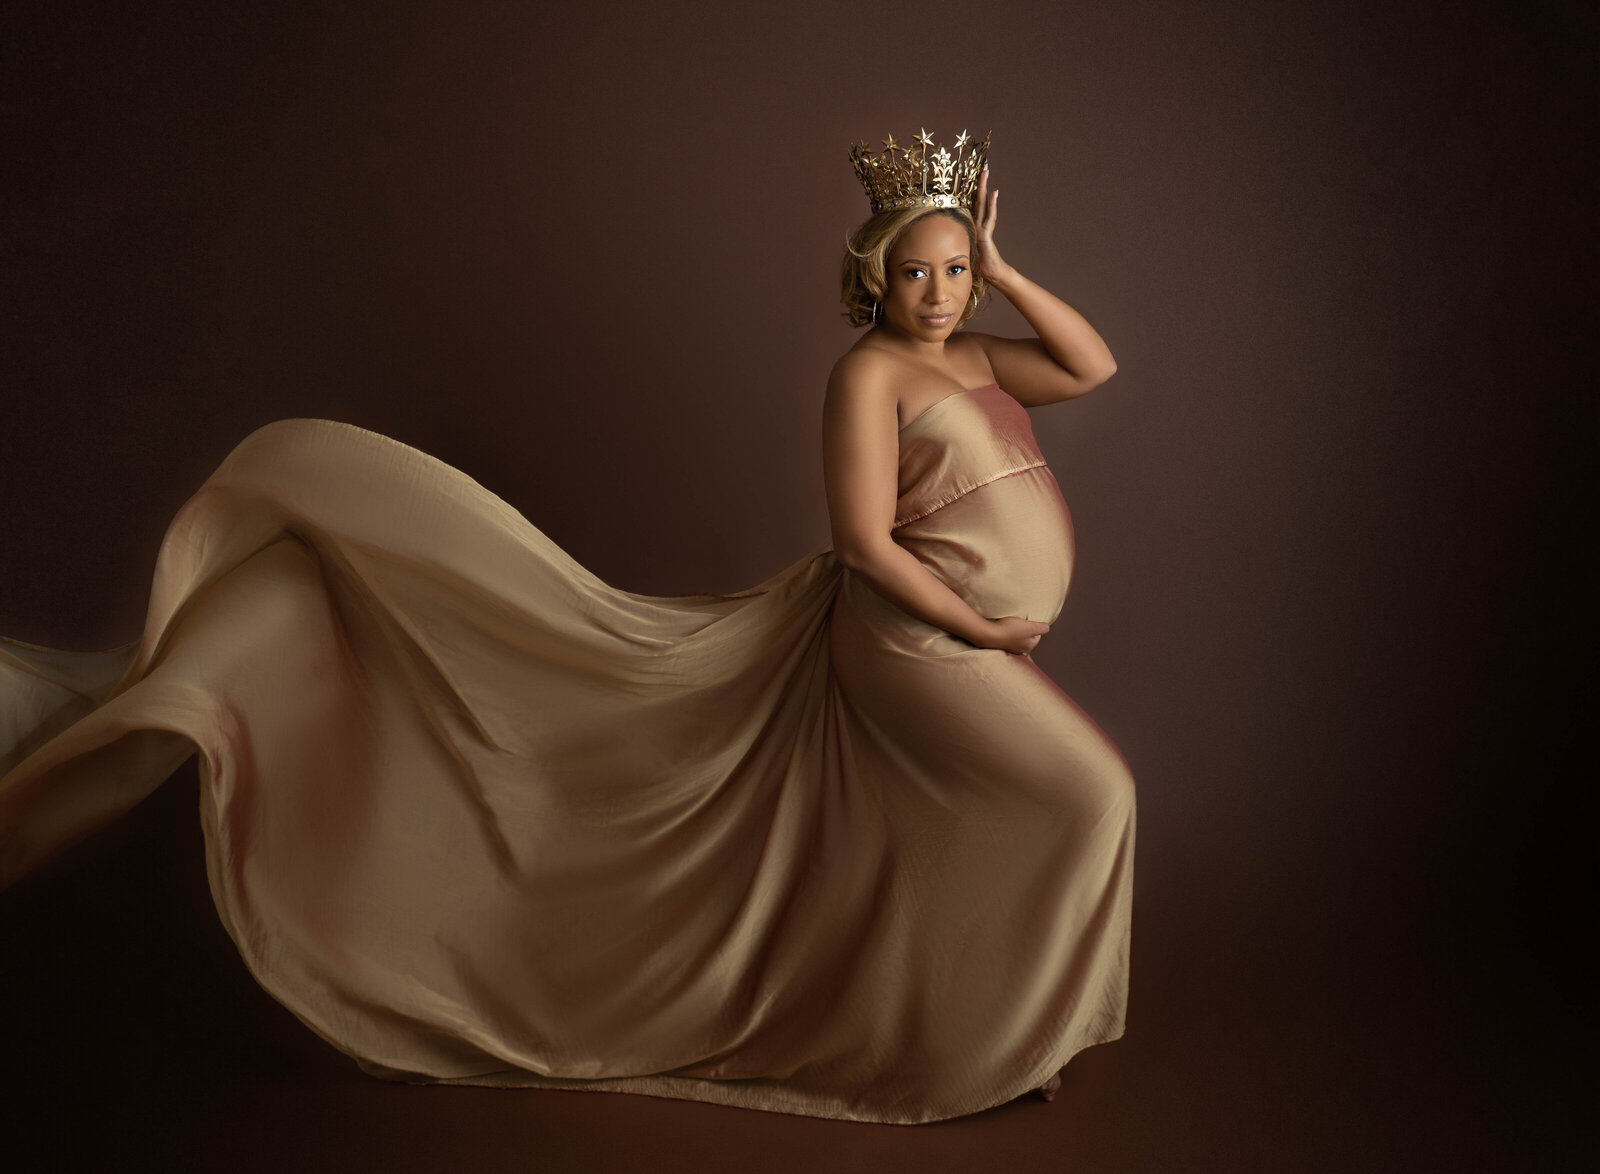 Woodstock photographer Maternity